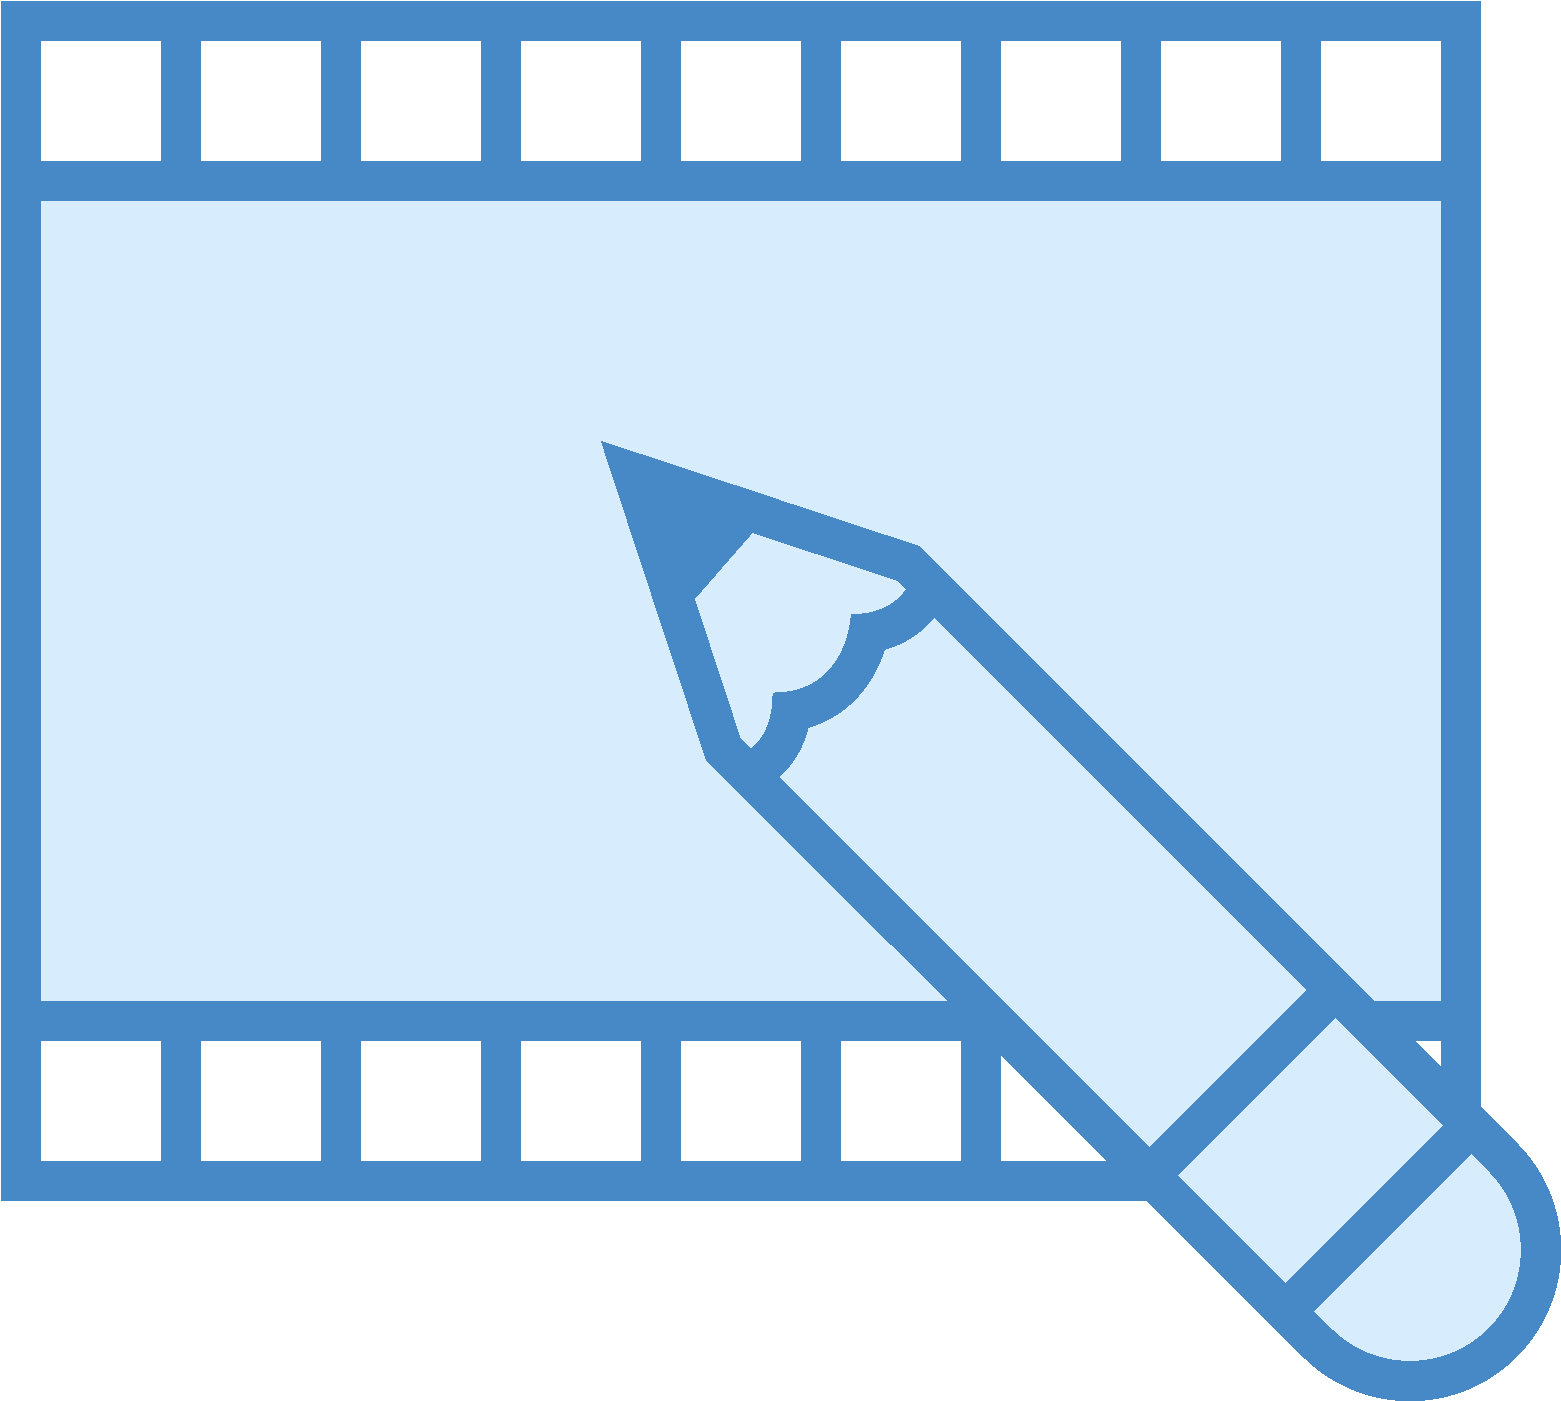 A Pencil And Film Strip